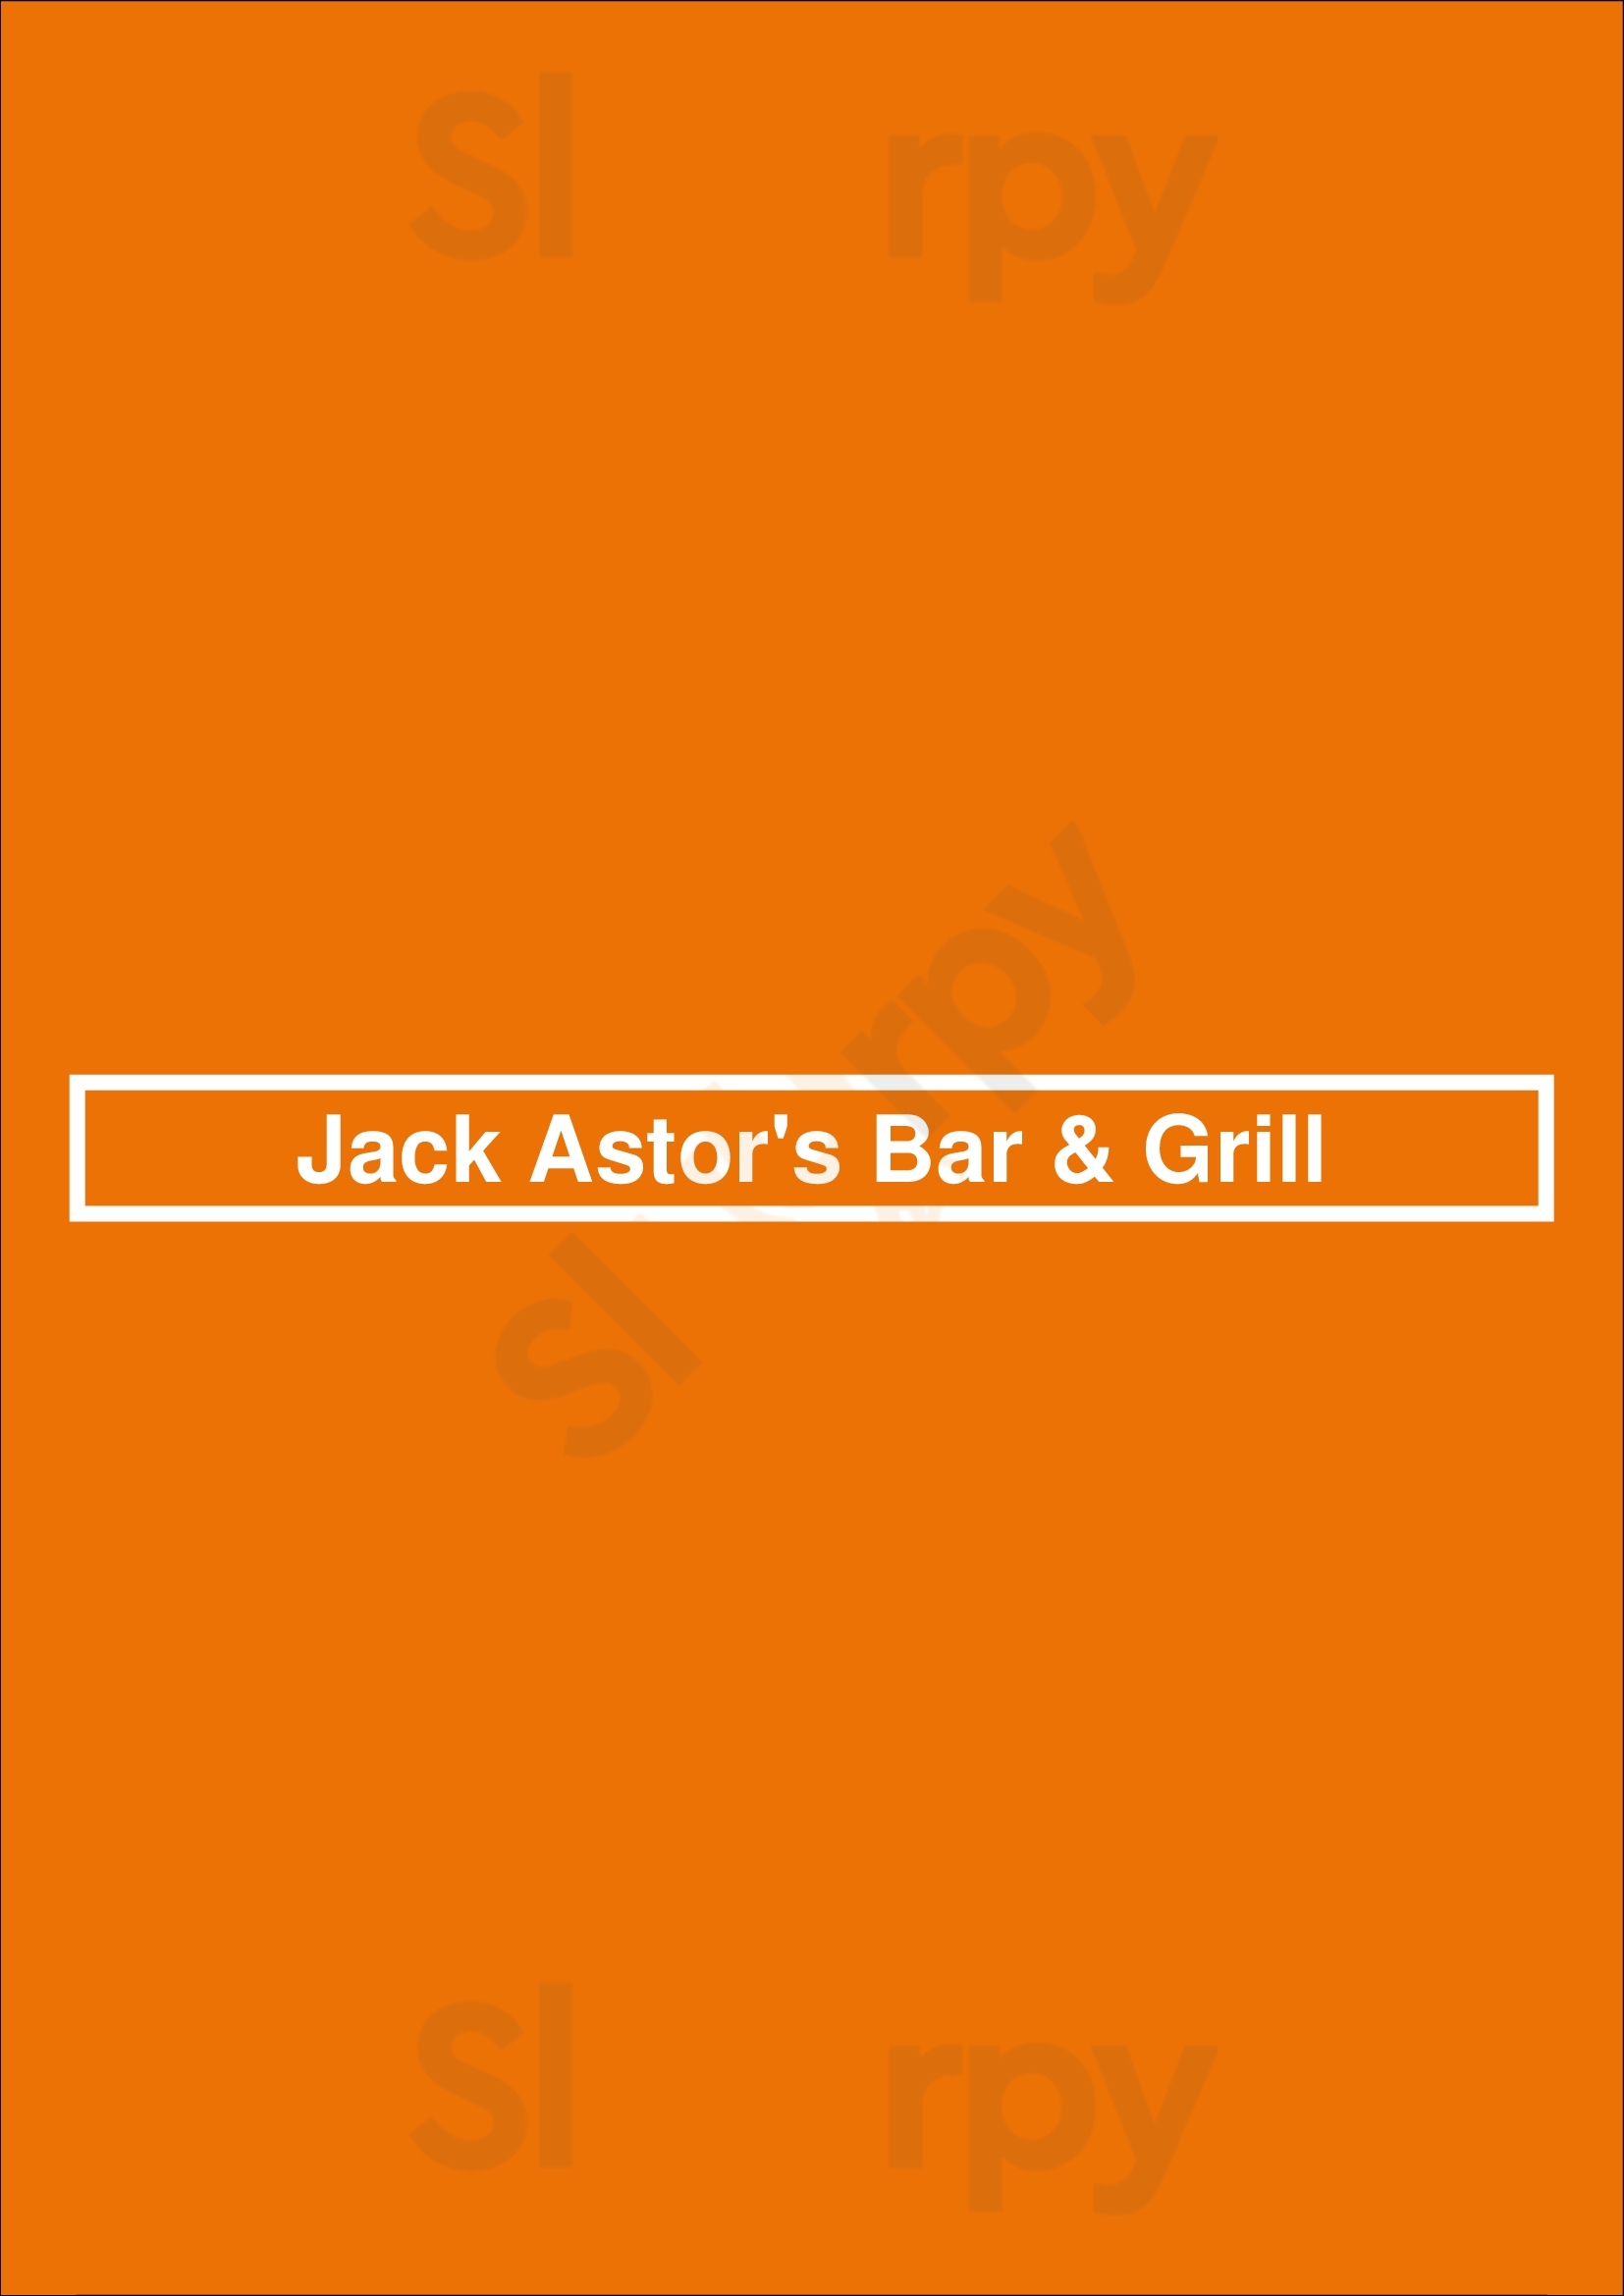 Jack Astor's Brampton Menu - 1